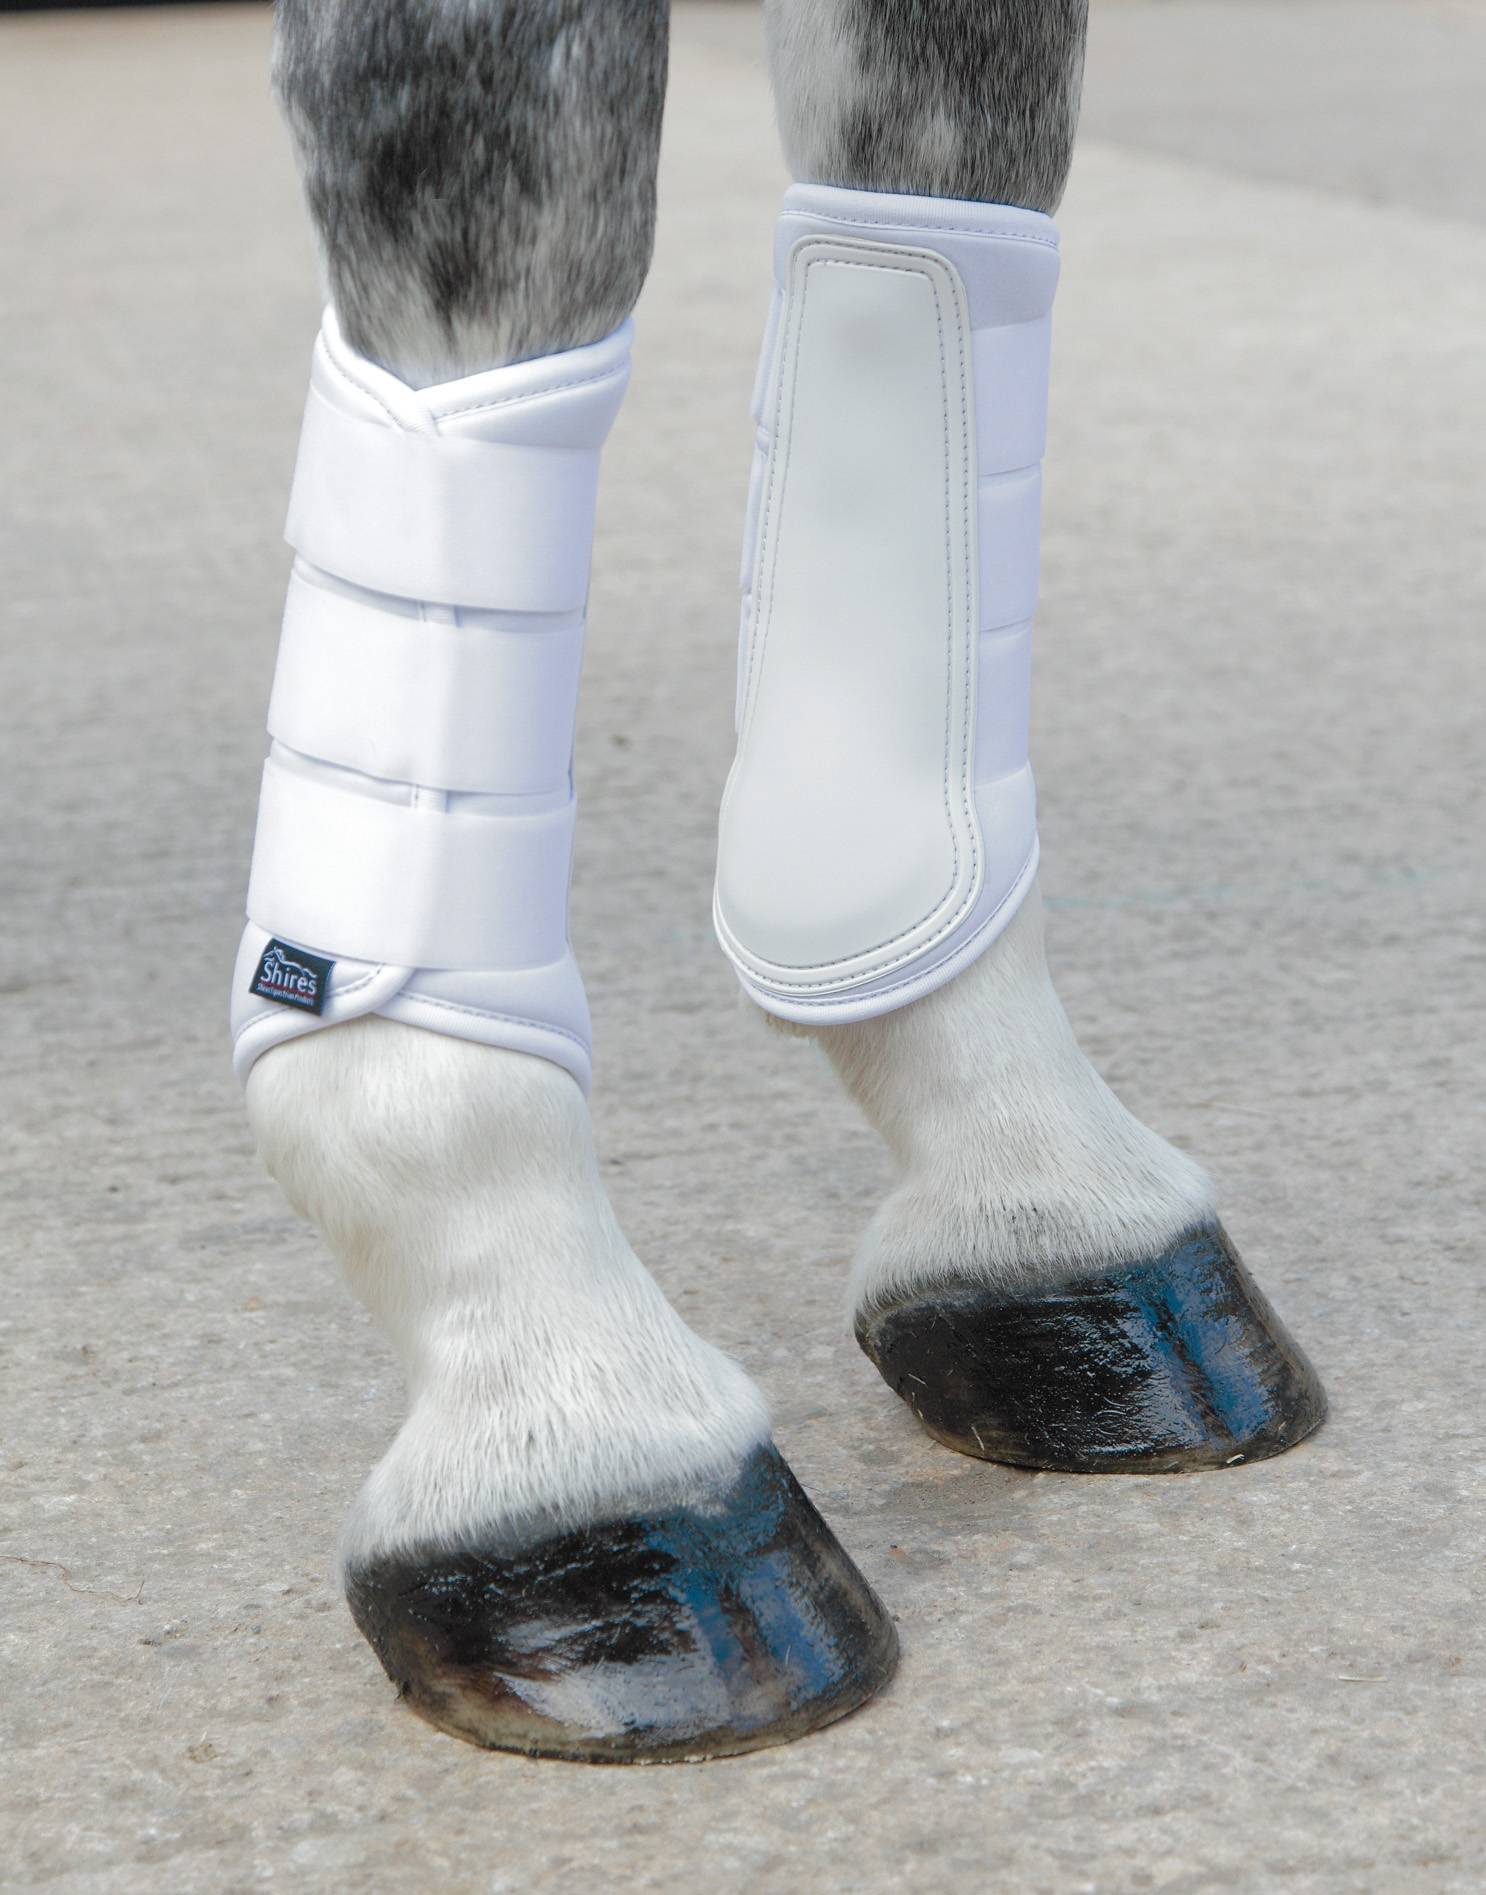 Shires Arma Neoprene Brushing Boots in White 